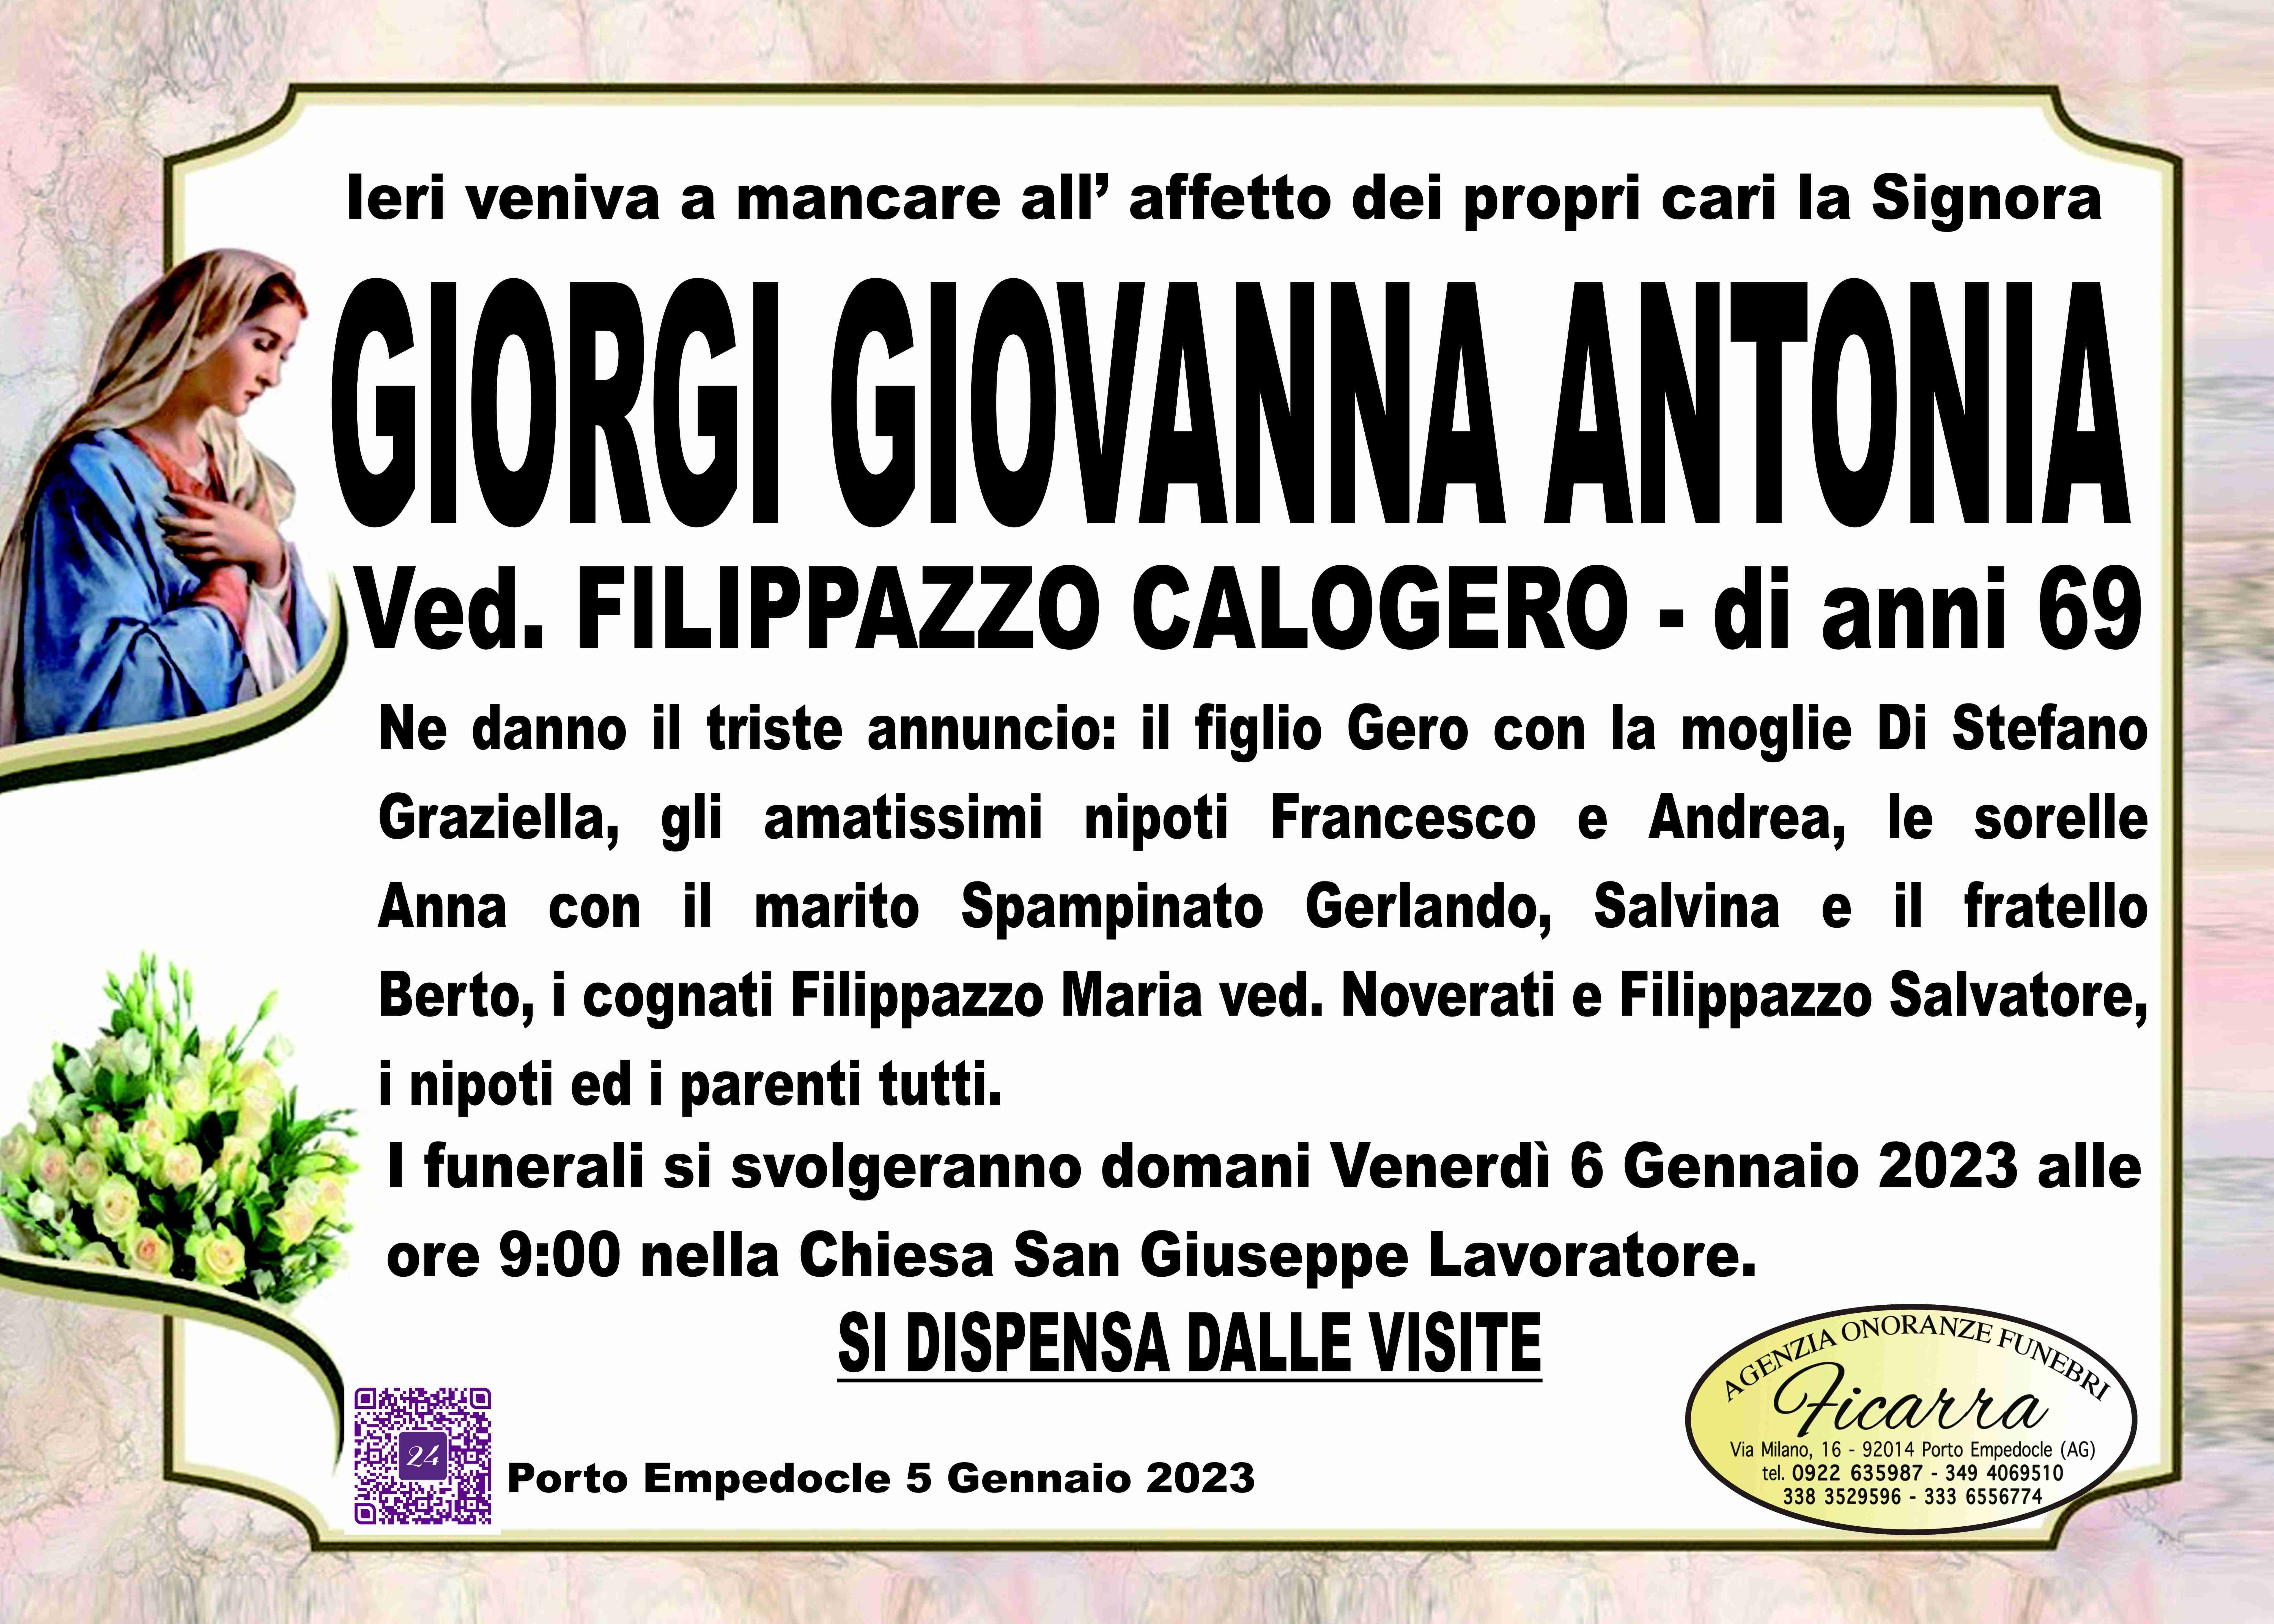 Giovanna Antonia Giorgi